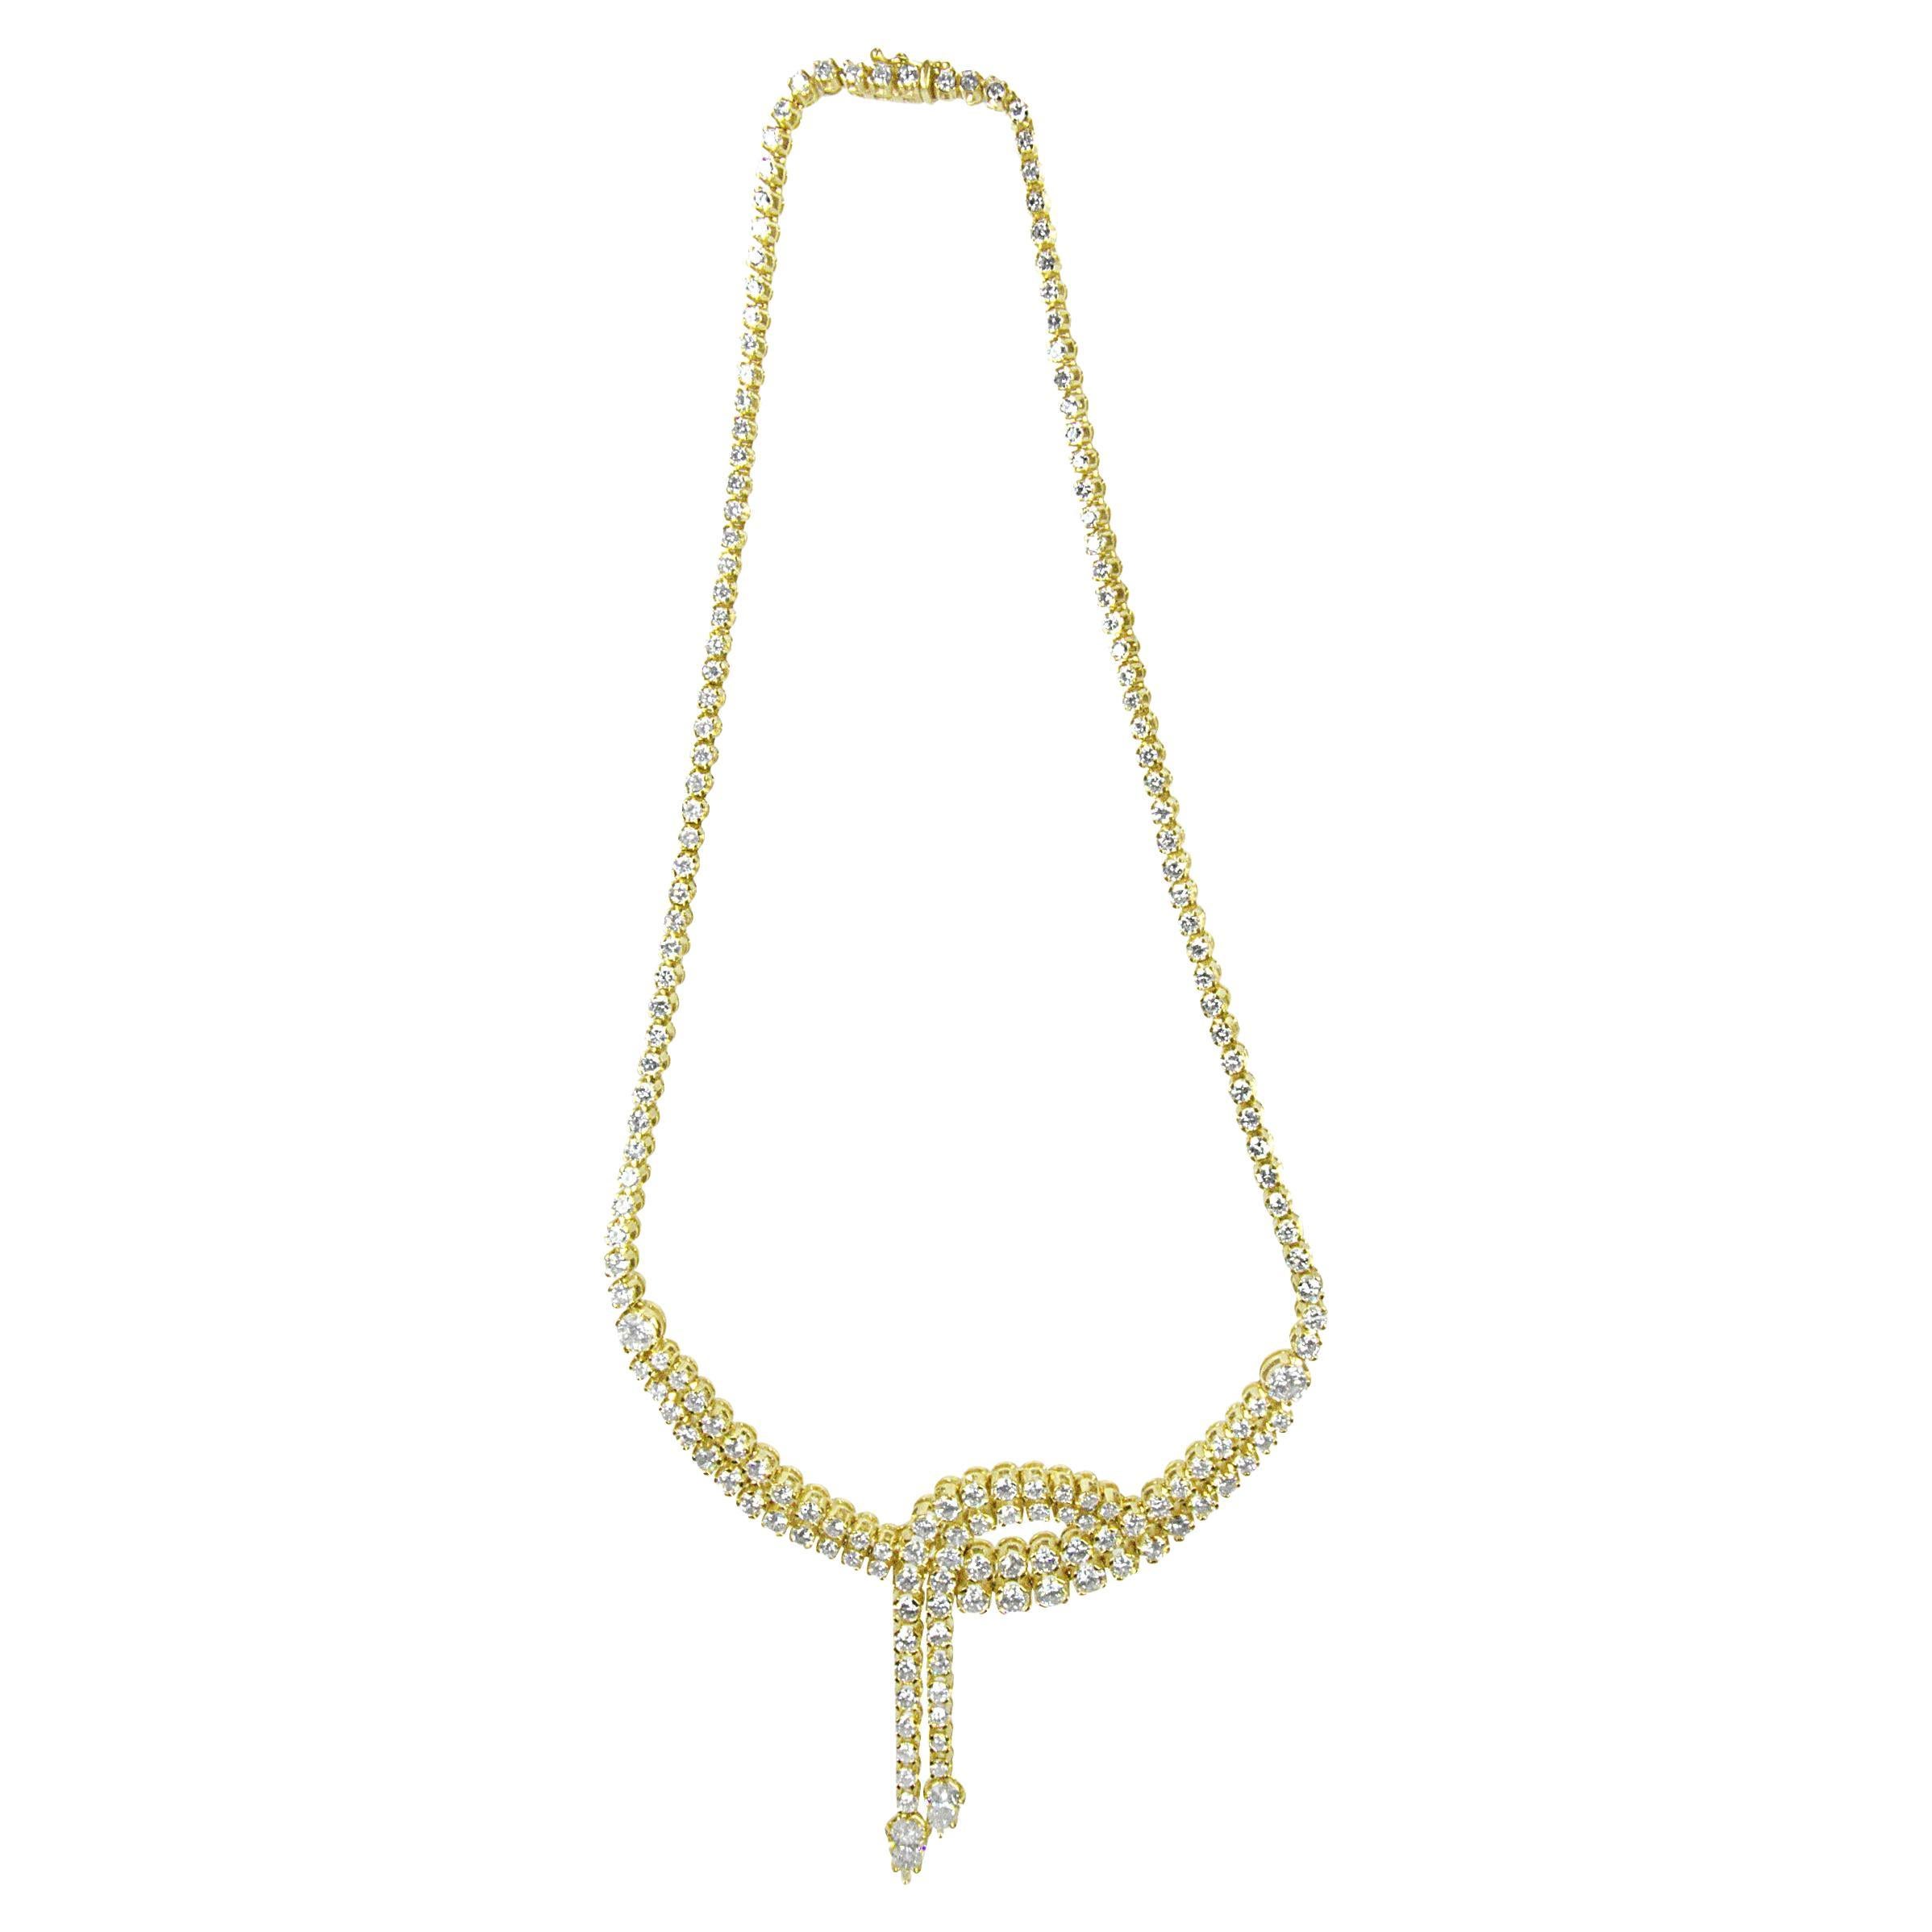 14K Yellow Gold 17.0 Carat Diamond Double Row Lariat Tennis Necklace